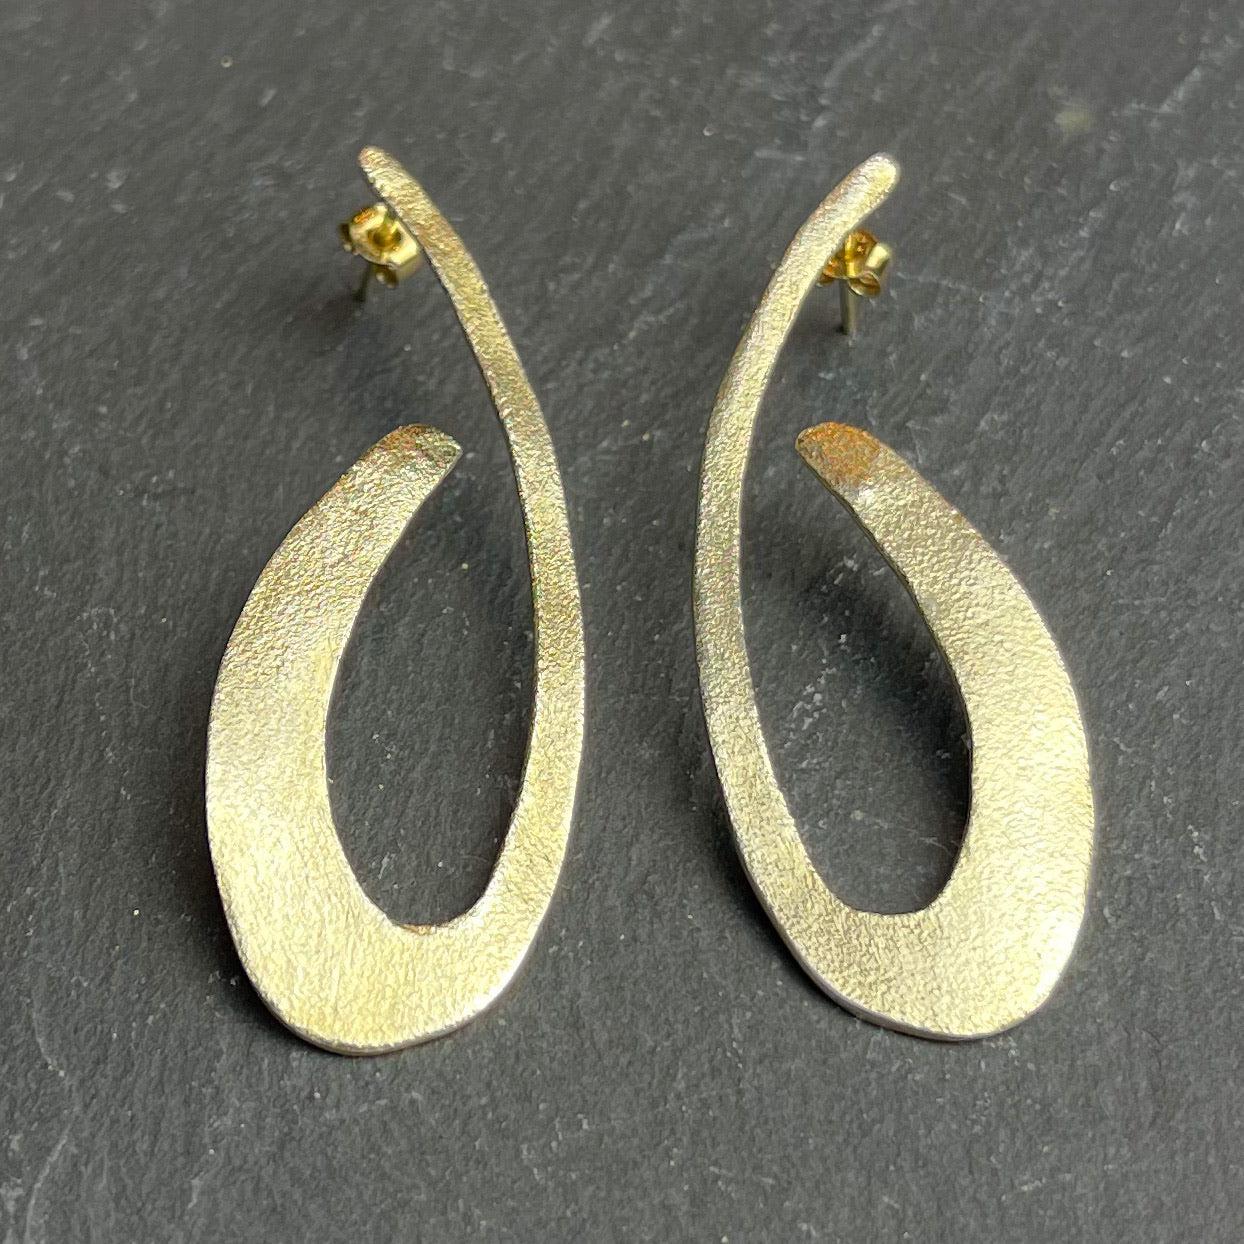 Gold Swoop Earrings - The Nancy Smillie Shop - Art, Jewellery & Designer Gifts Glasgow